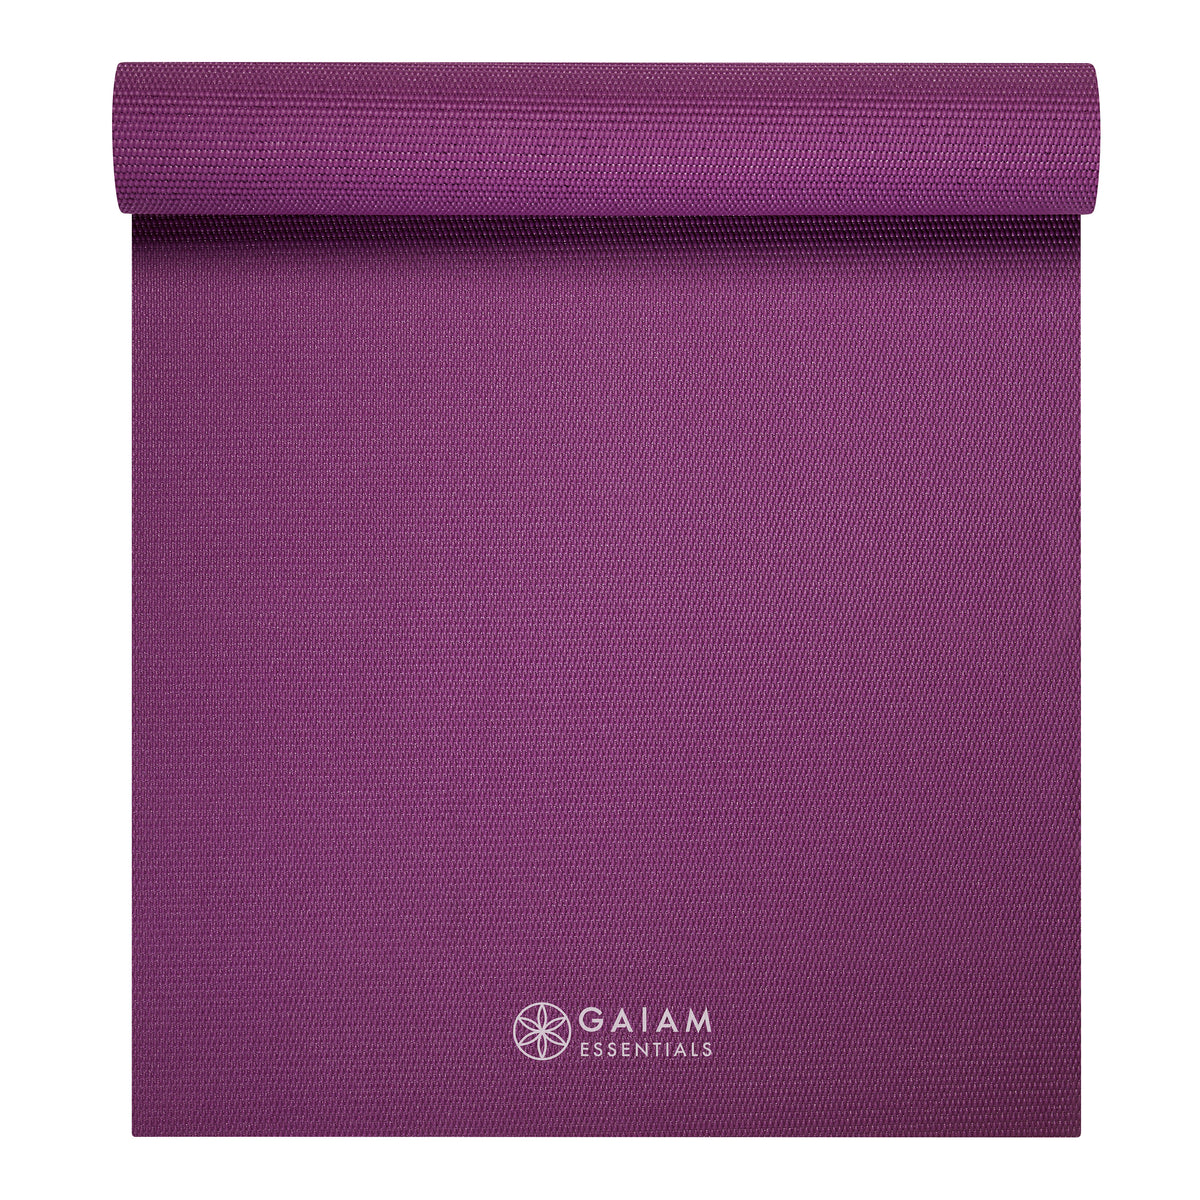 Gaiam Essentials Yoga Mat Purple top rolled